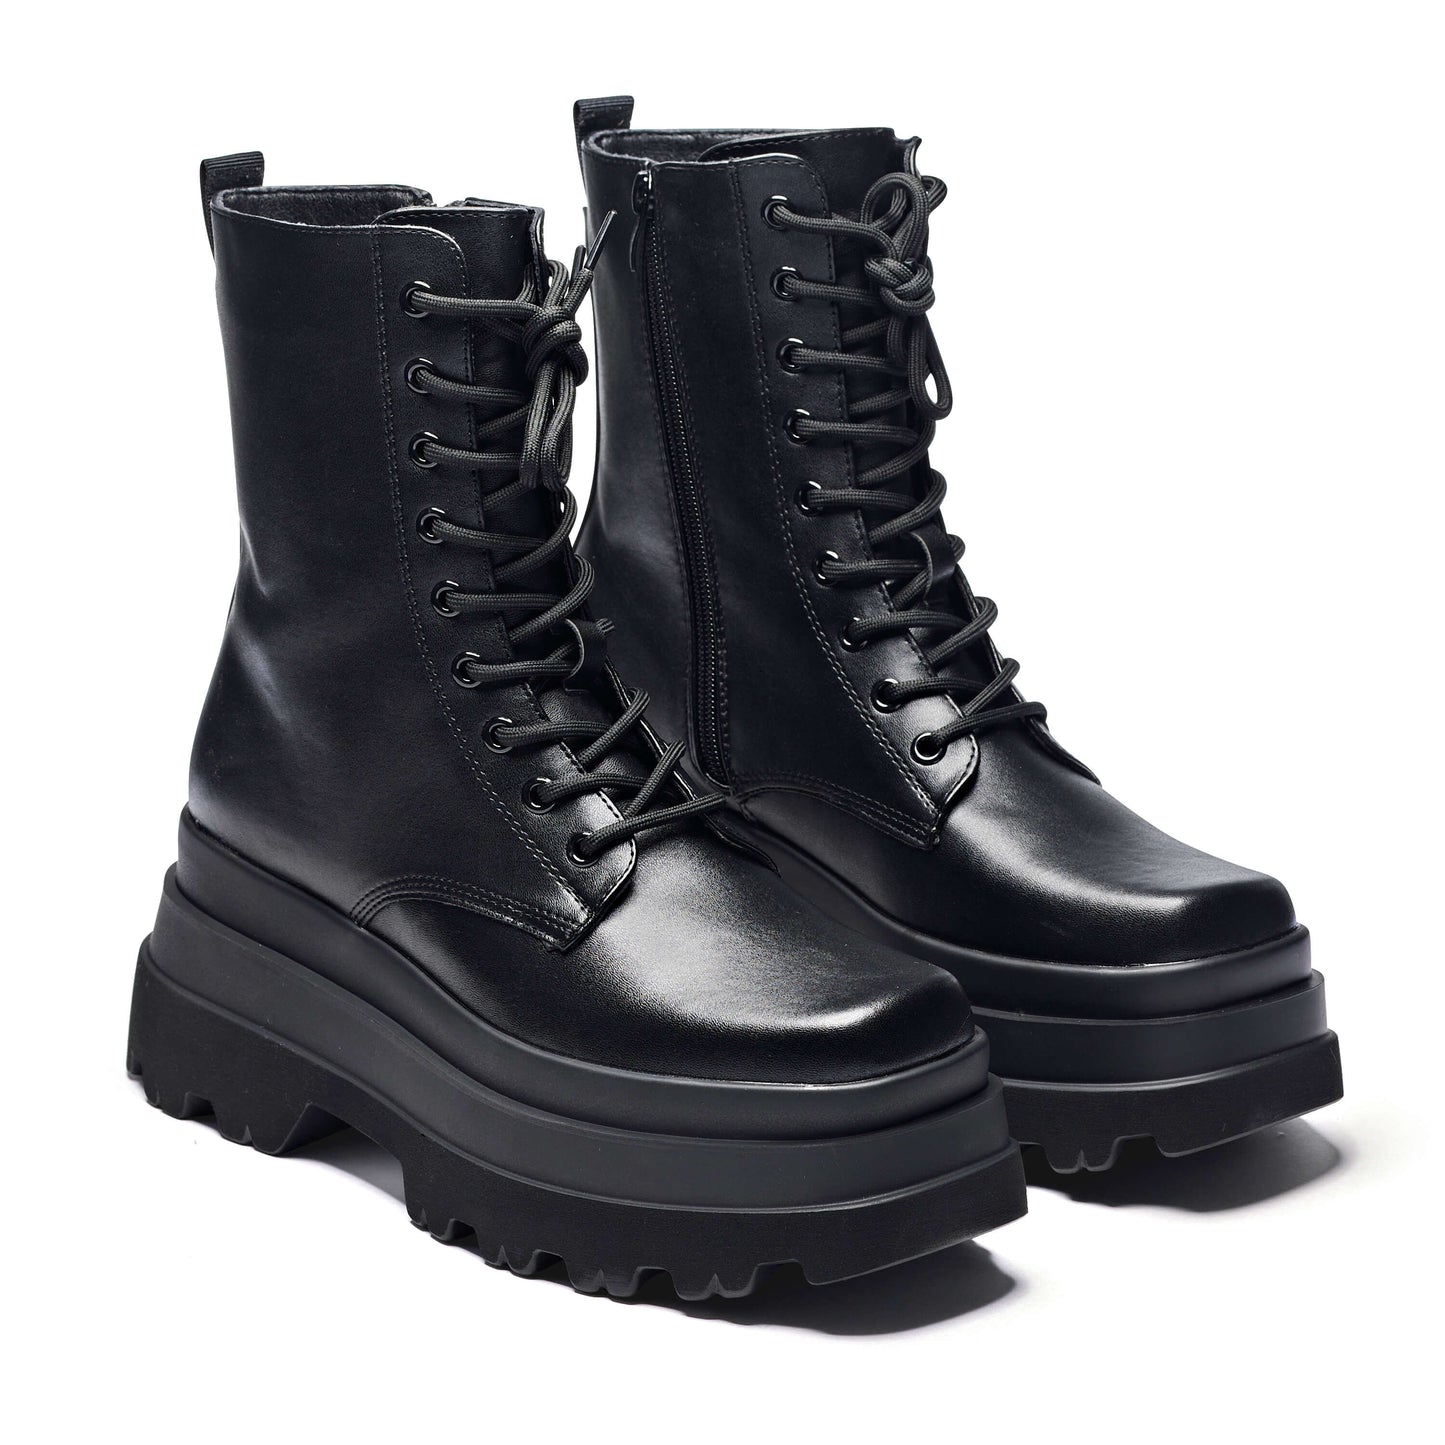 Deathwatch Trident Platform Boots - Ankle Boots - KOI Footwear - Black - Three-Quarter View